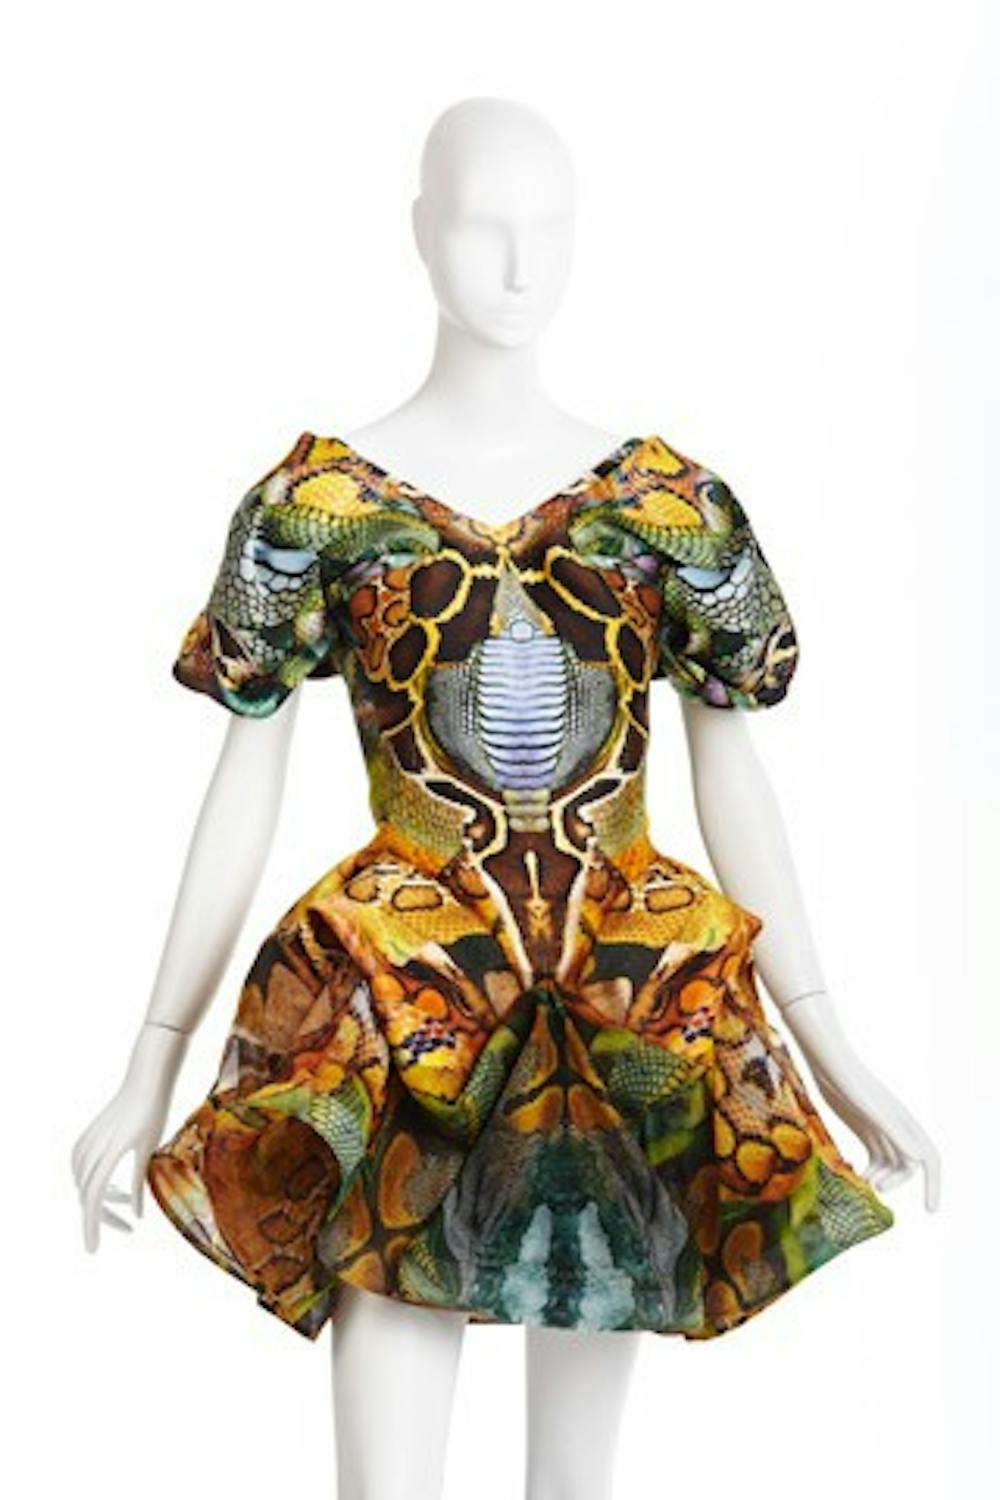 Dress designed by Alexander McQueen. Photo courtesy the Phoenix Art Museum